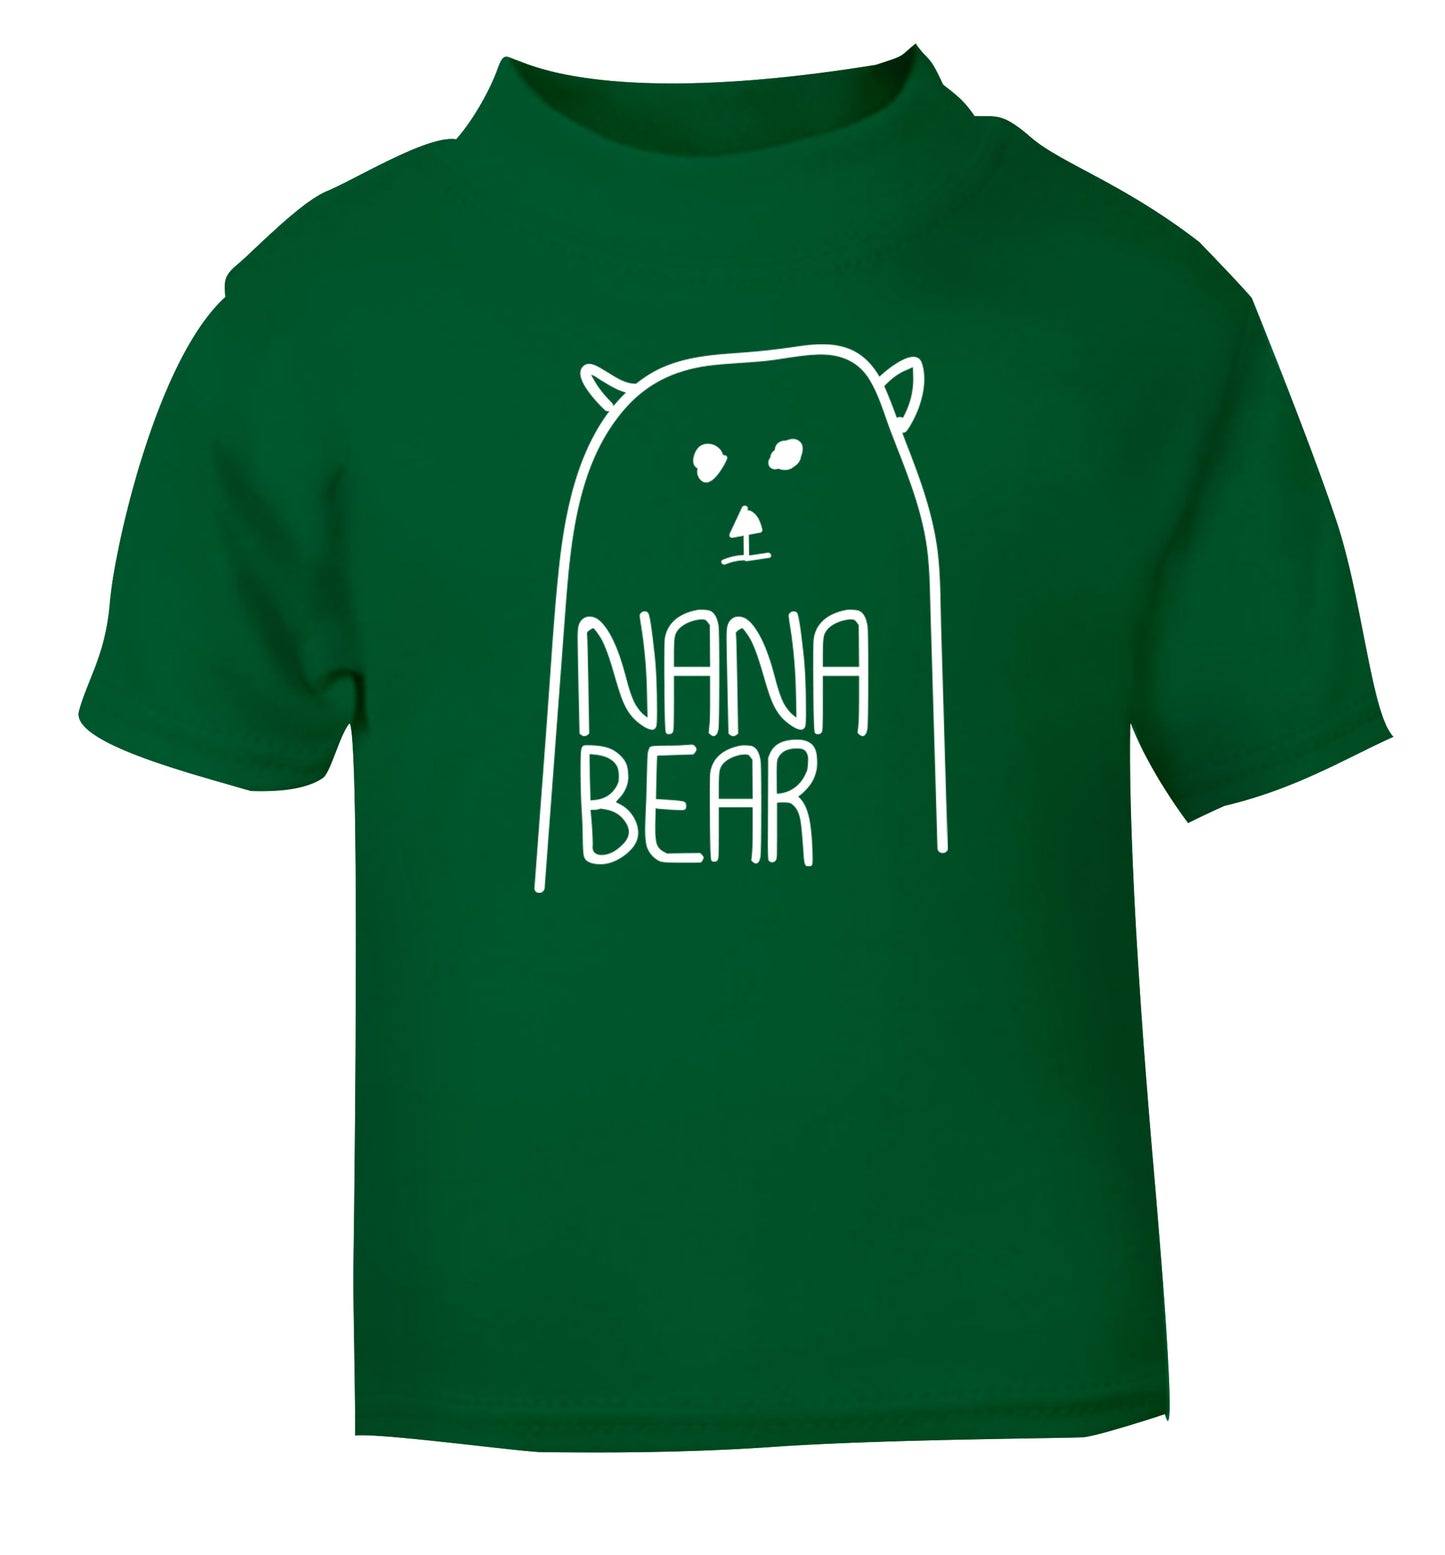 Nana bear green Baby Toddler Tshirt 2 Years